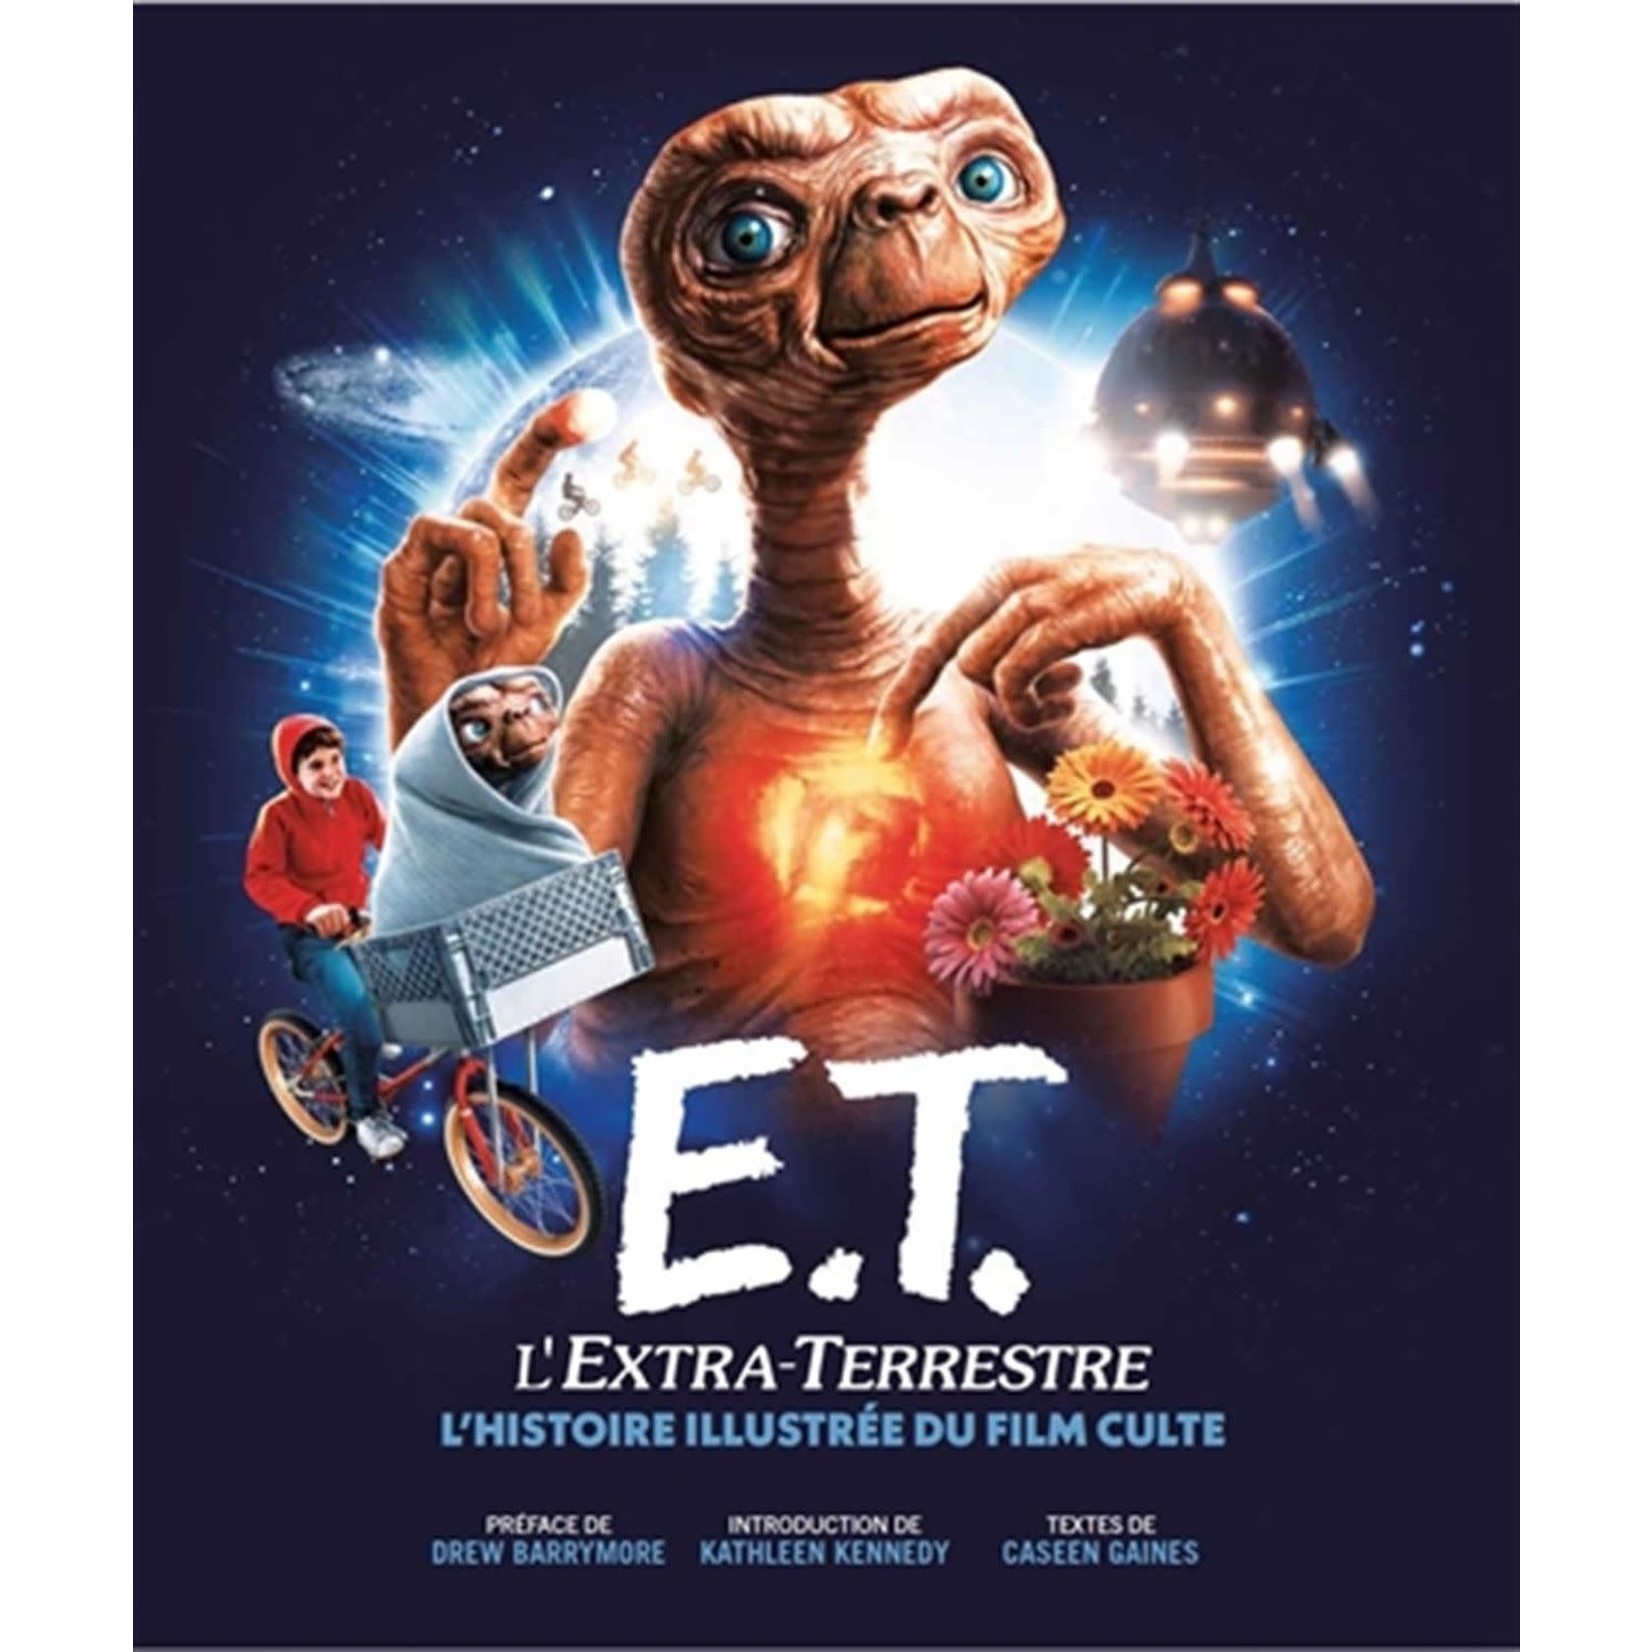 Huginn et Muninn E.T. L'Extra-Terrestre - Histoire illustrée du film culte